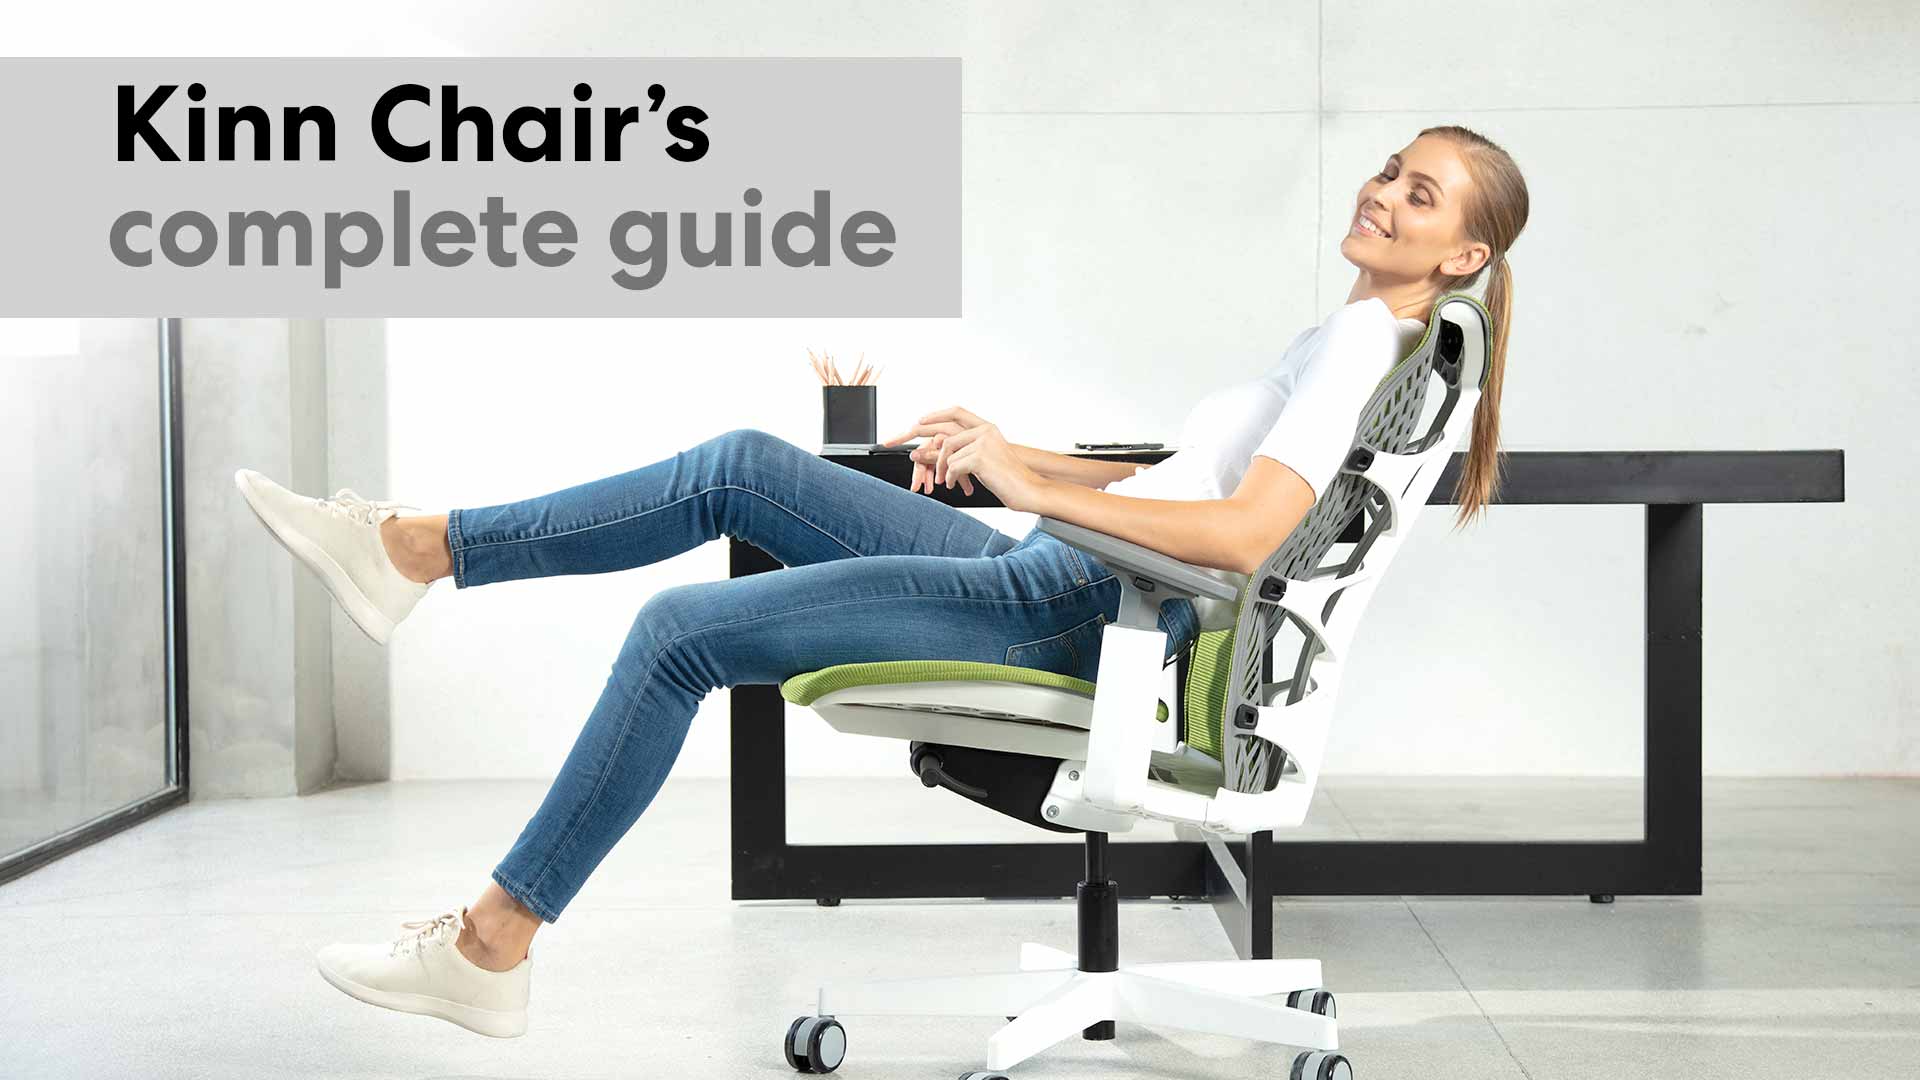 How To Use Your New Ergochair Pro Kinn Chair